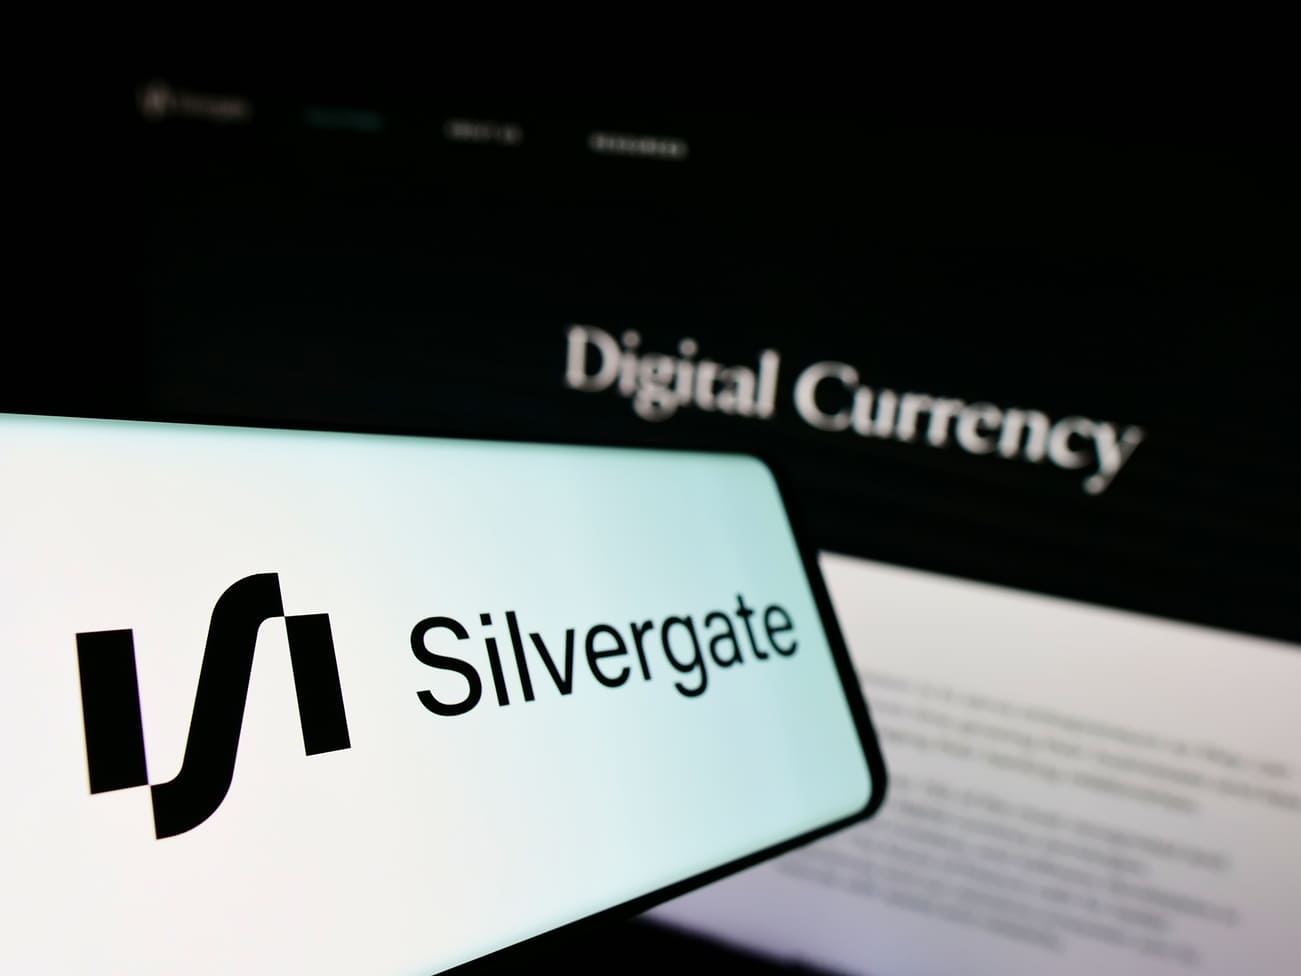  Silvergate Bank to Liquidate Assets